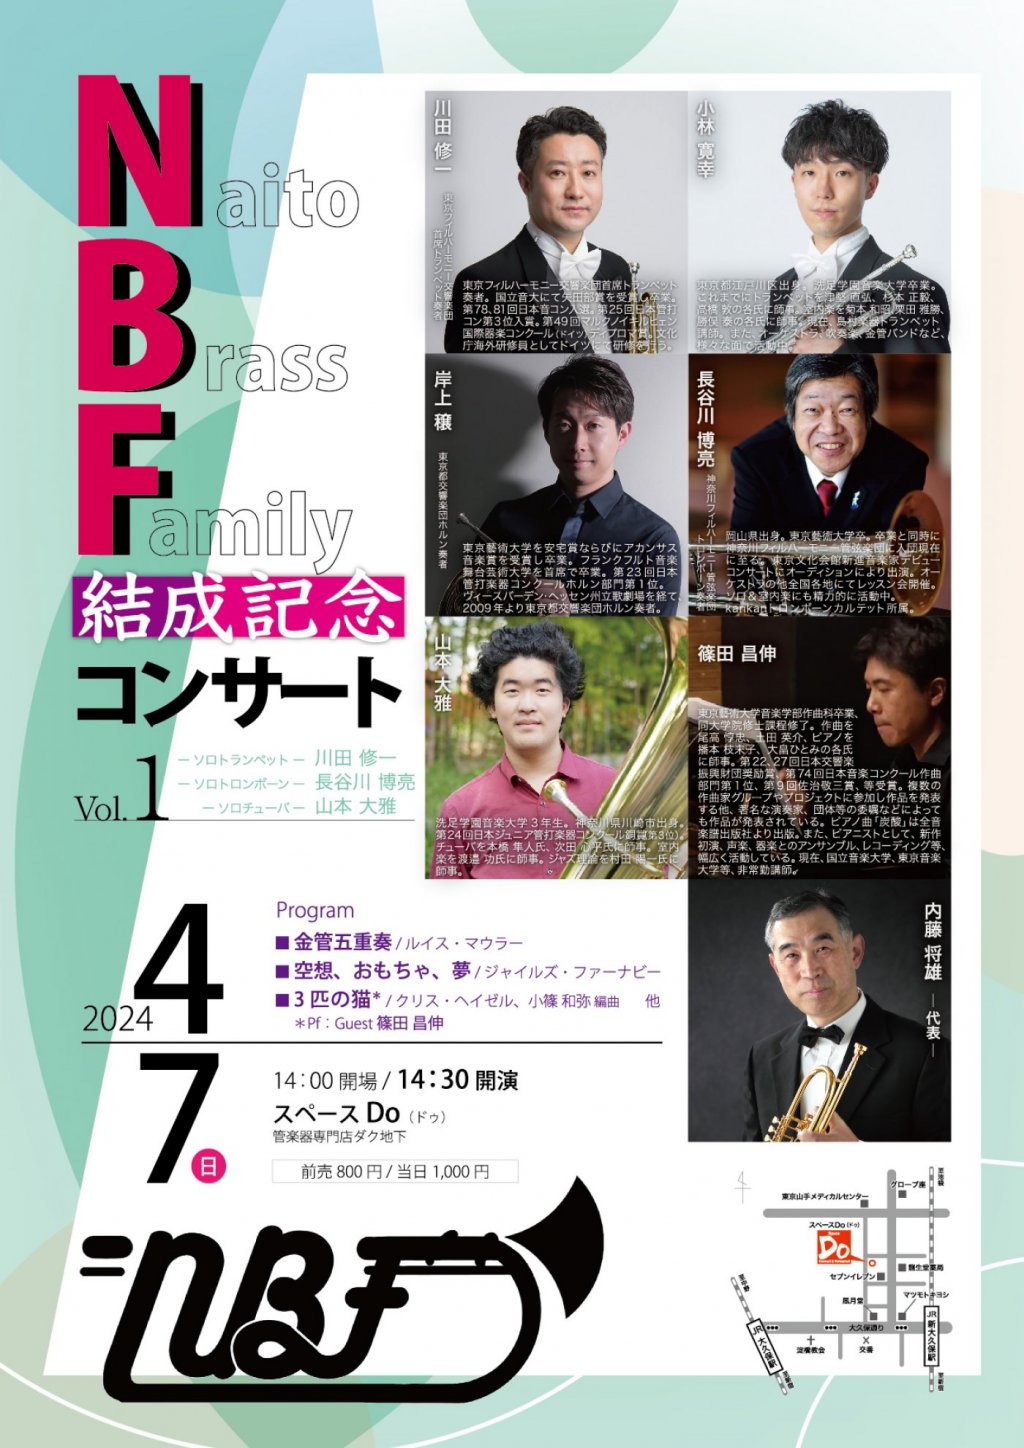 NBF -Naito Brass Family-「結成記念コンサート」Vol.1